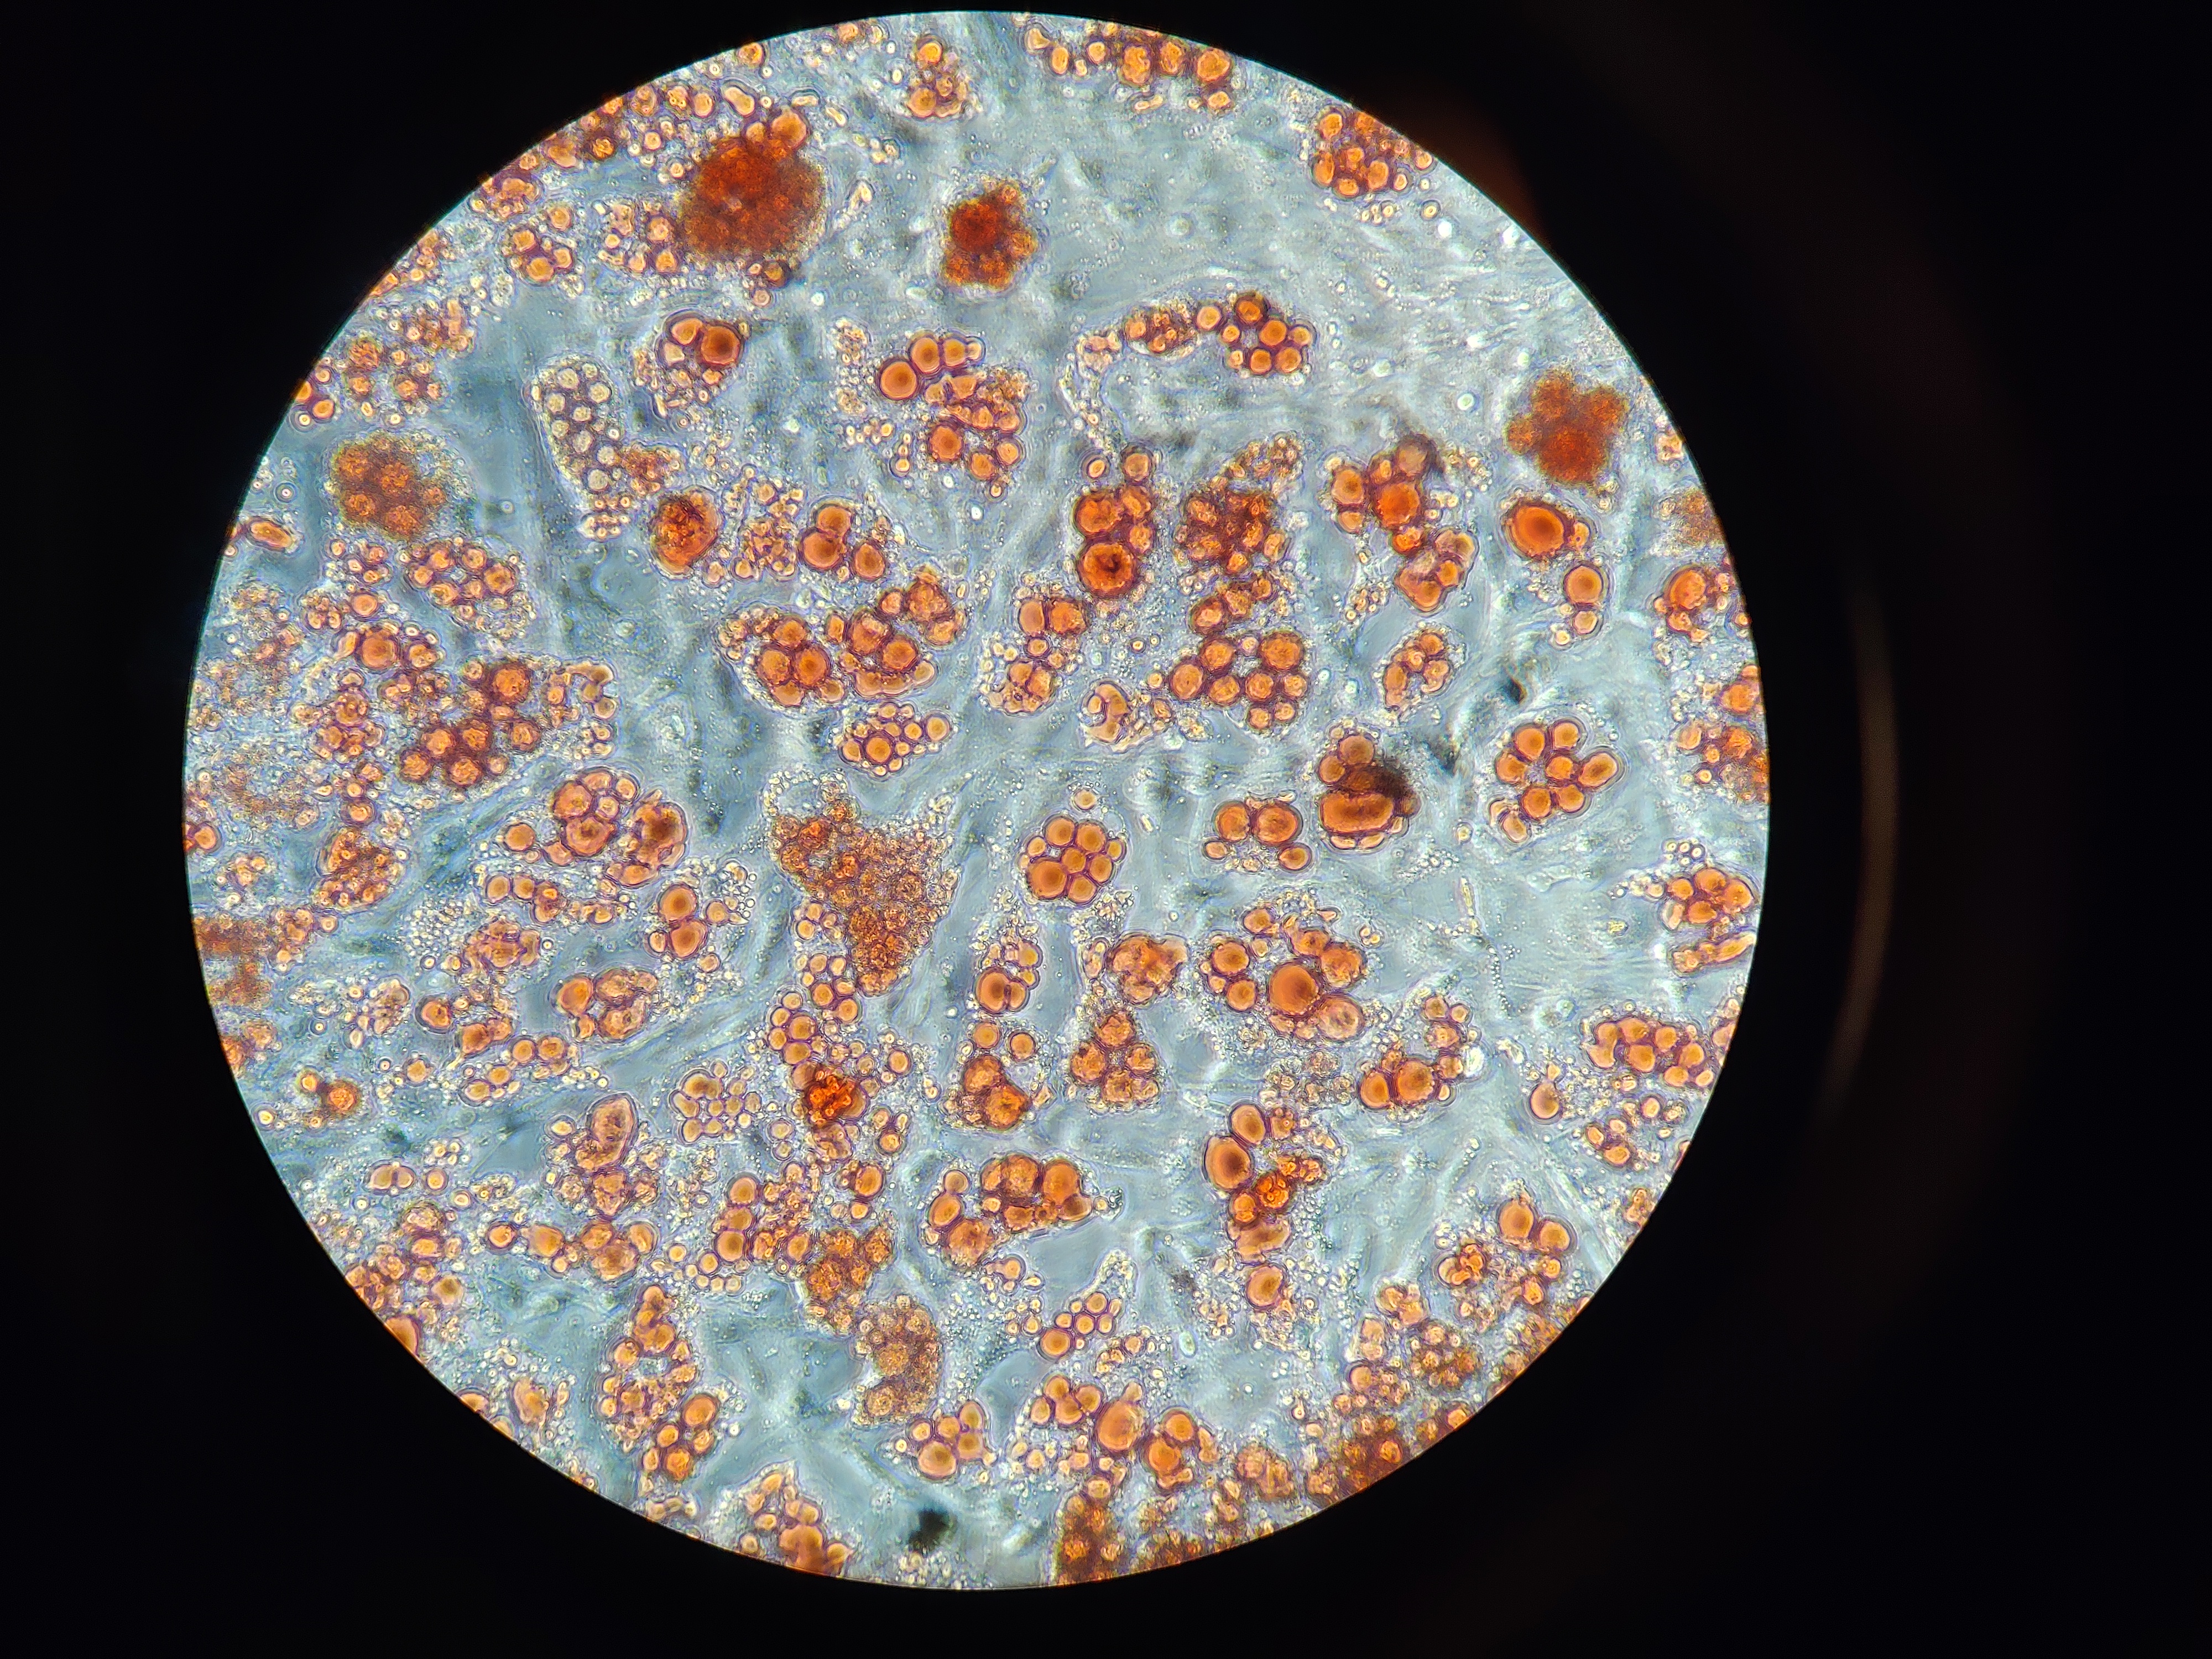 Fettzellen in Kultur, deren Fett mittels Oil-red-O Färbung rot angefärbt ist